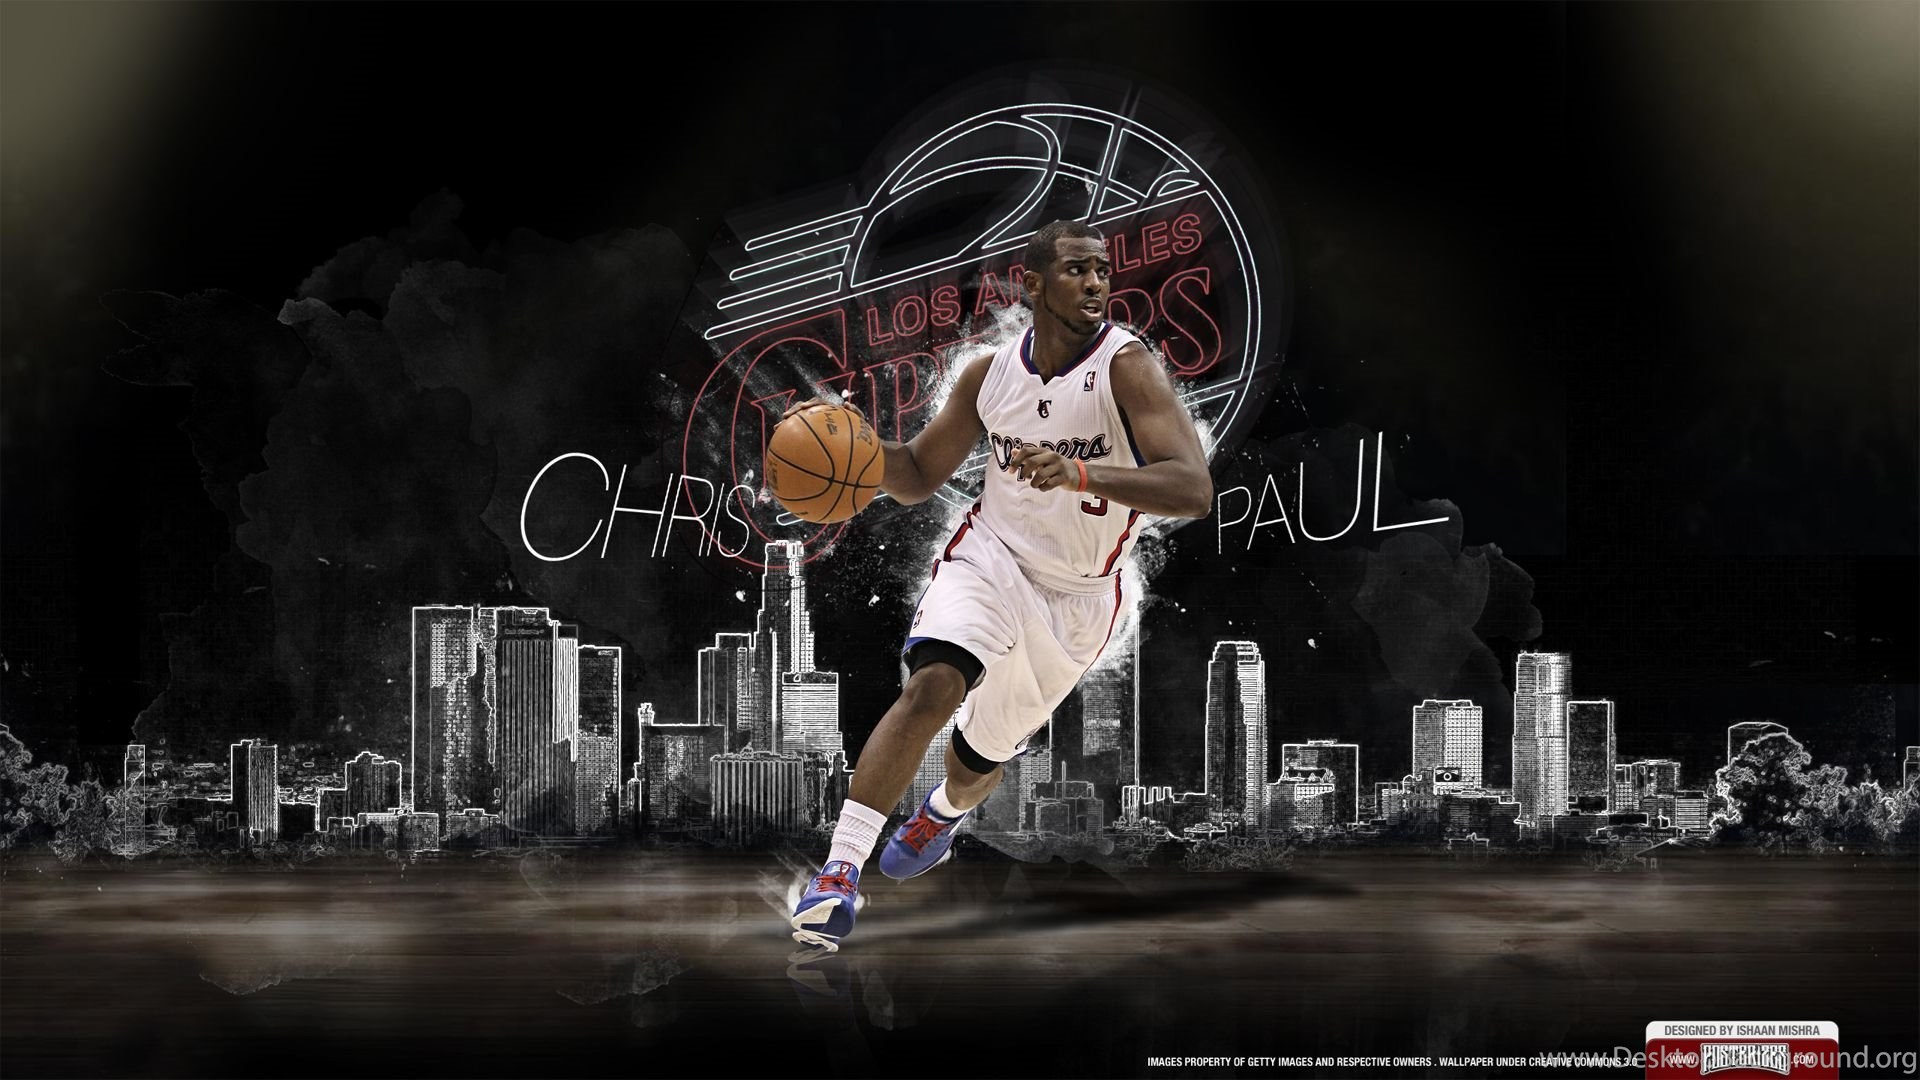 Chris Paul Cp3 Clippers Wallpaper Desktop Background